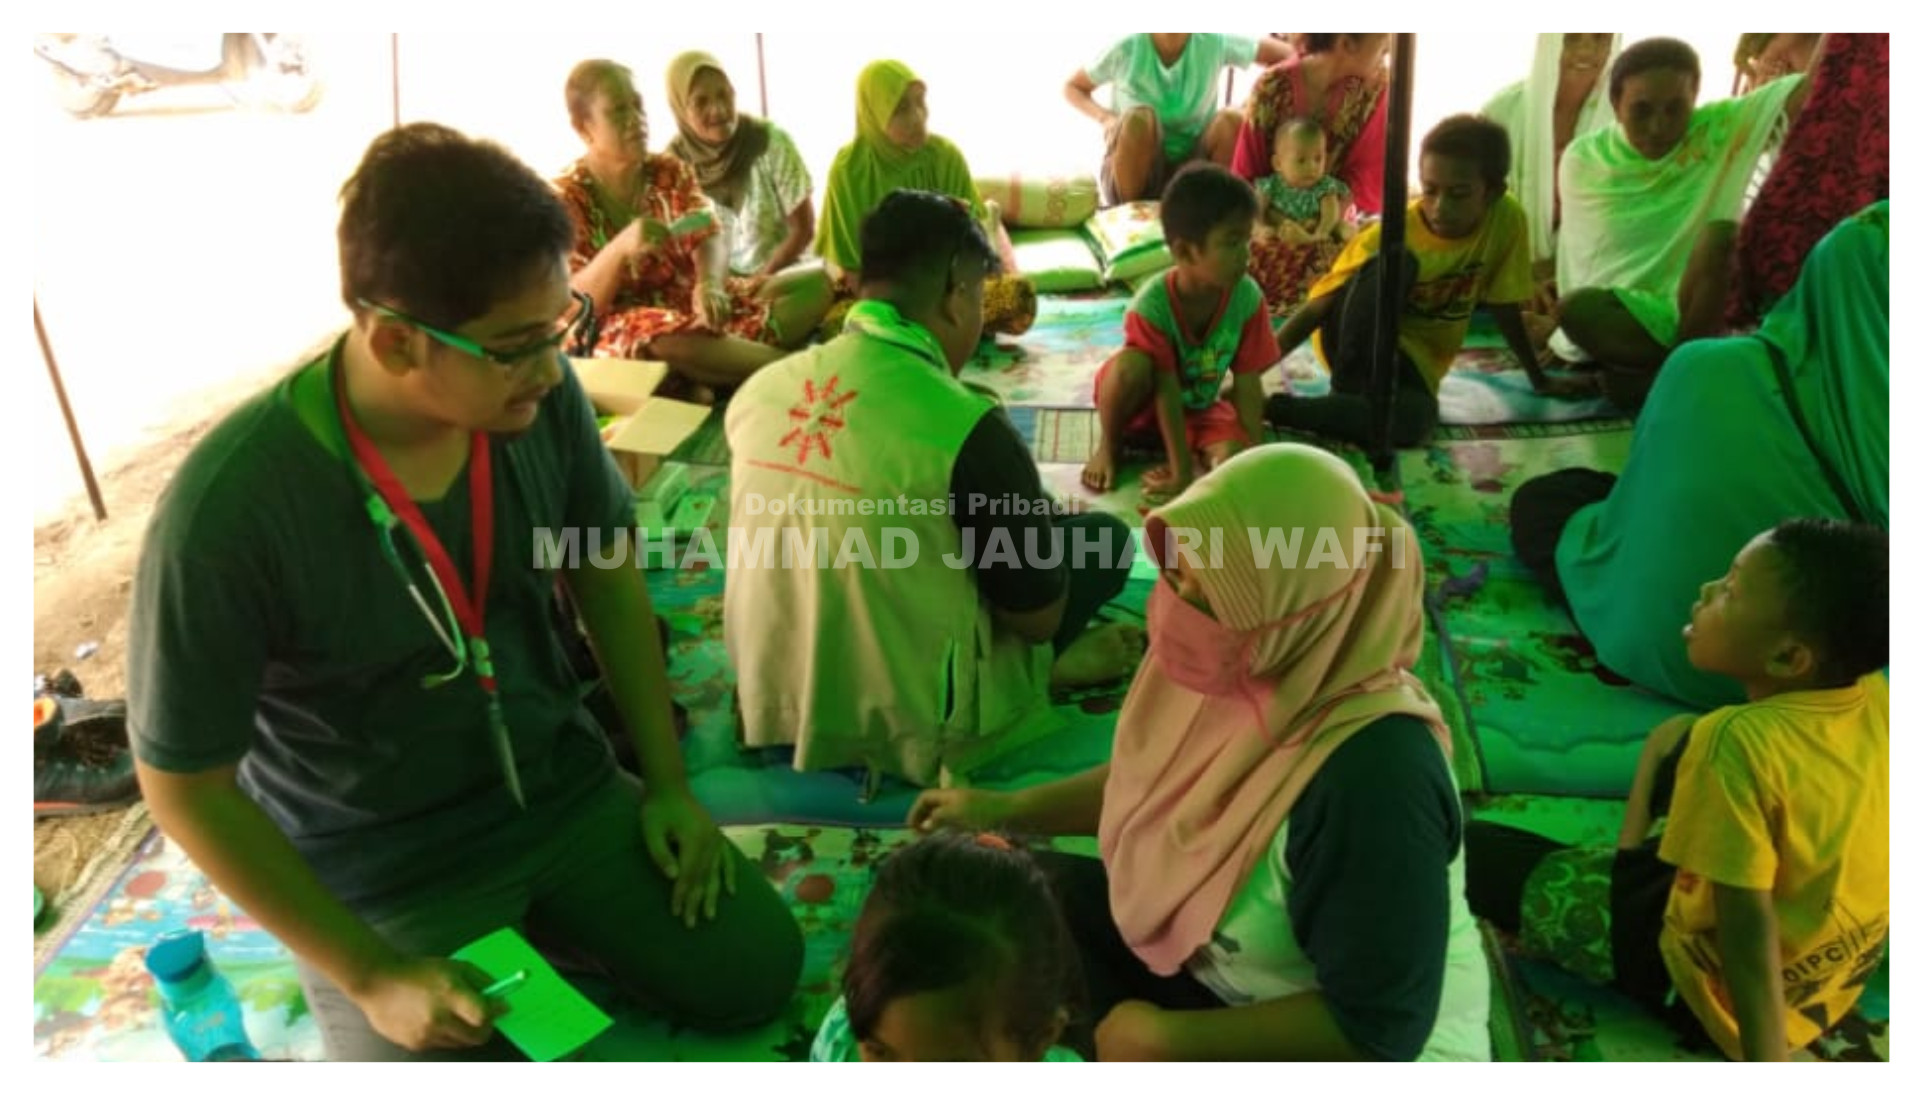 dr. Wafi saat di tenda pengungsian korban gempa (sumber : Dokumentasi Pribadi Muhammad Jauharil Wafi)